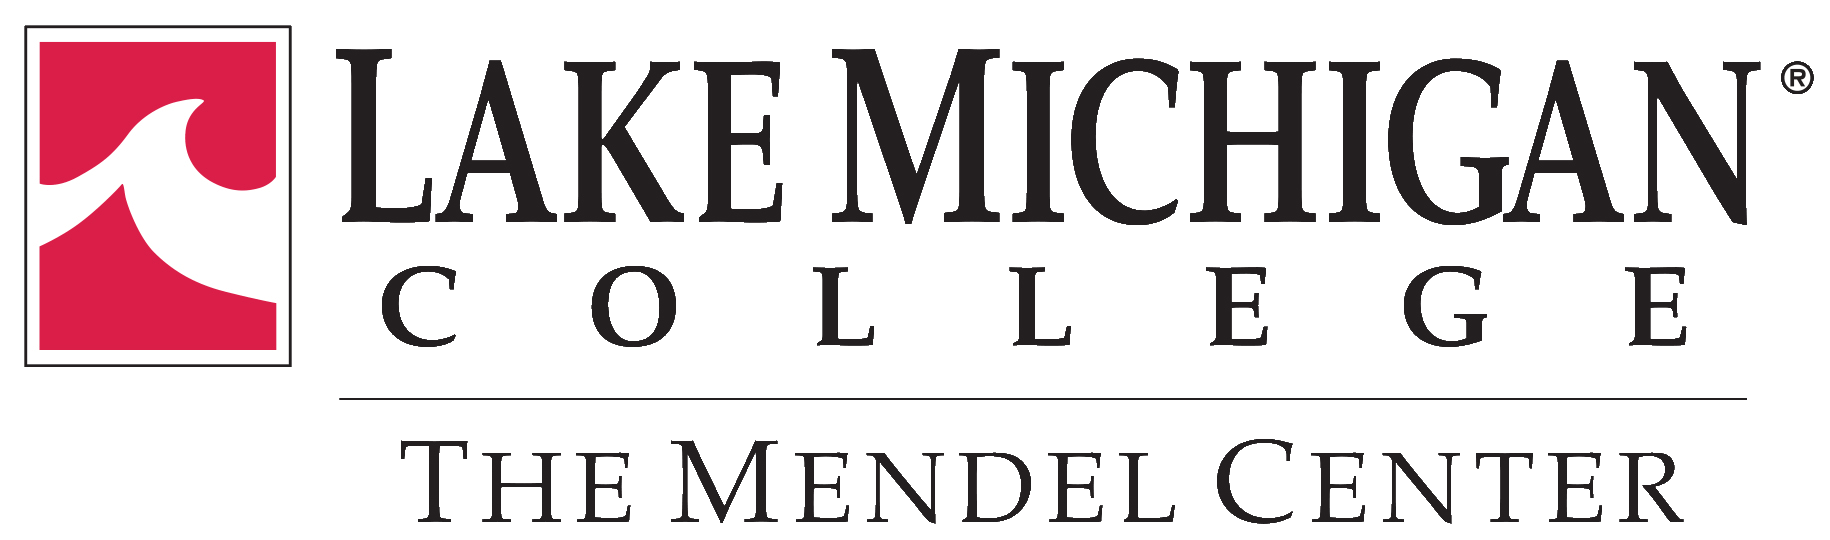 The Mendel Center at Lake Michigan College logo